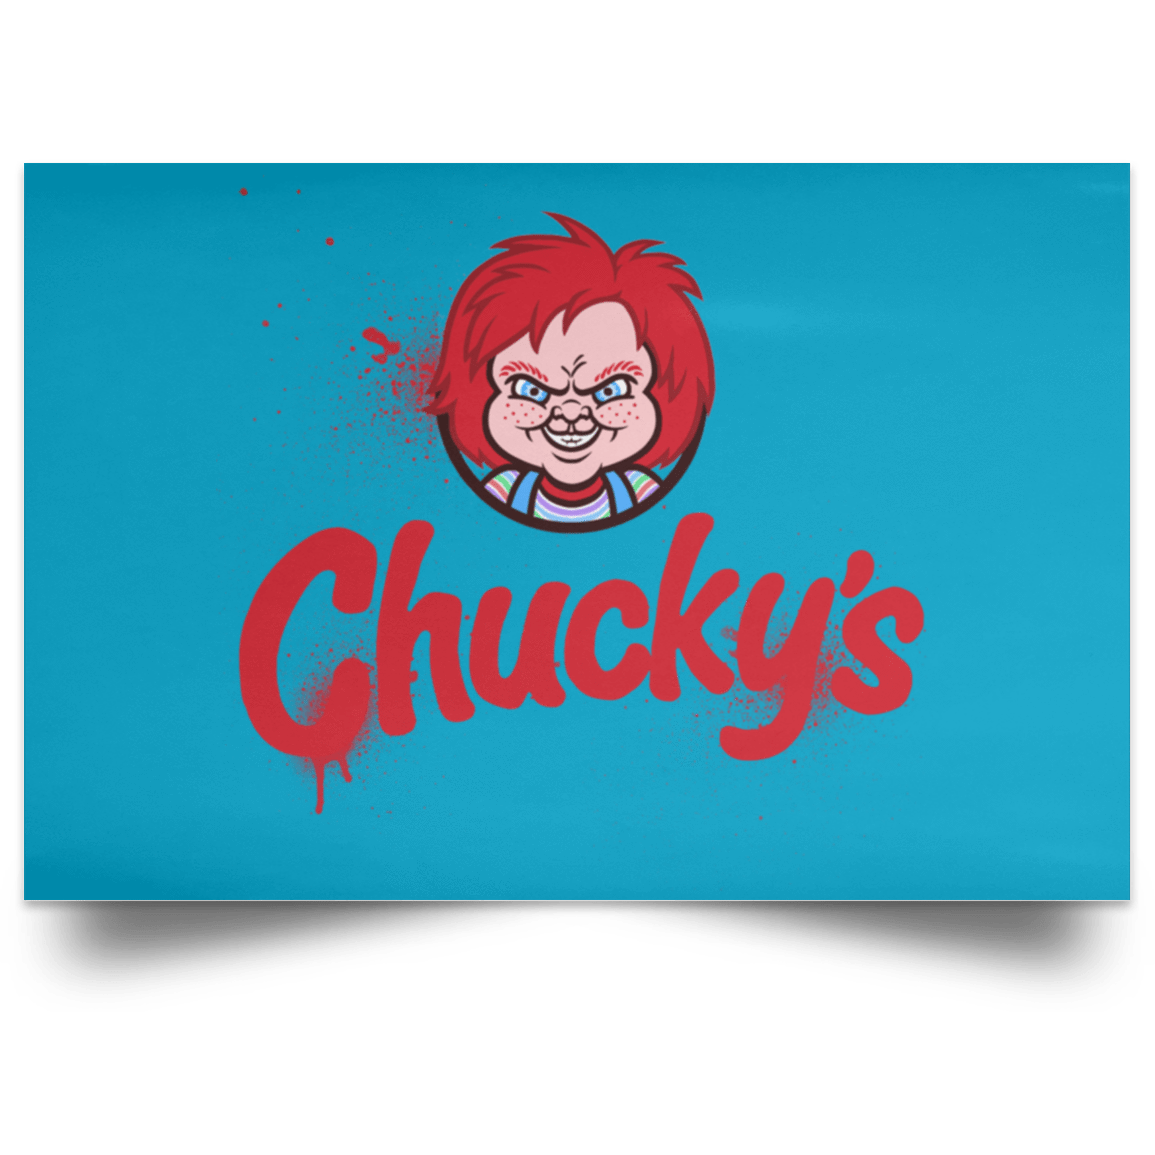 Housewares Turquoise / 18" x 12" Chuckys Logo Landscape Poster